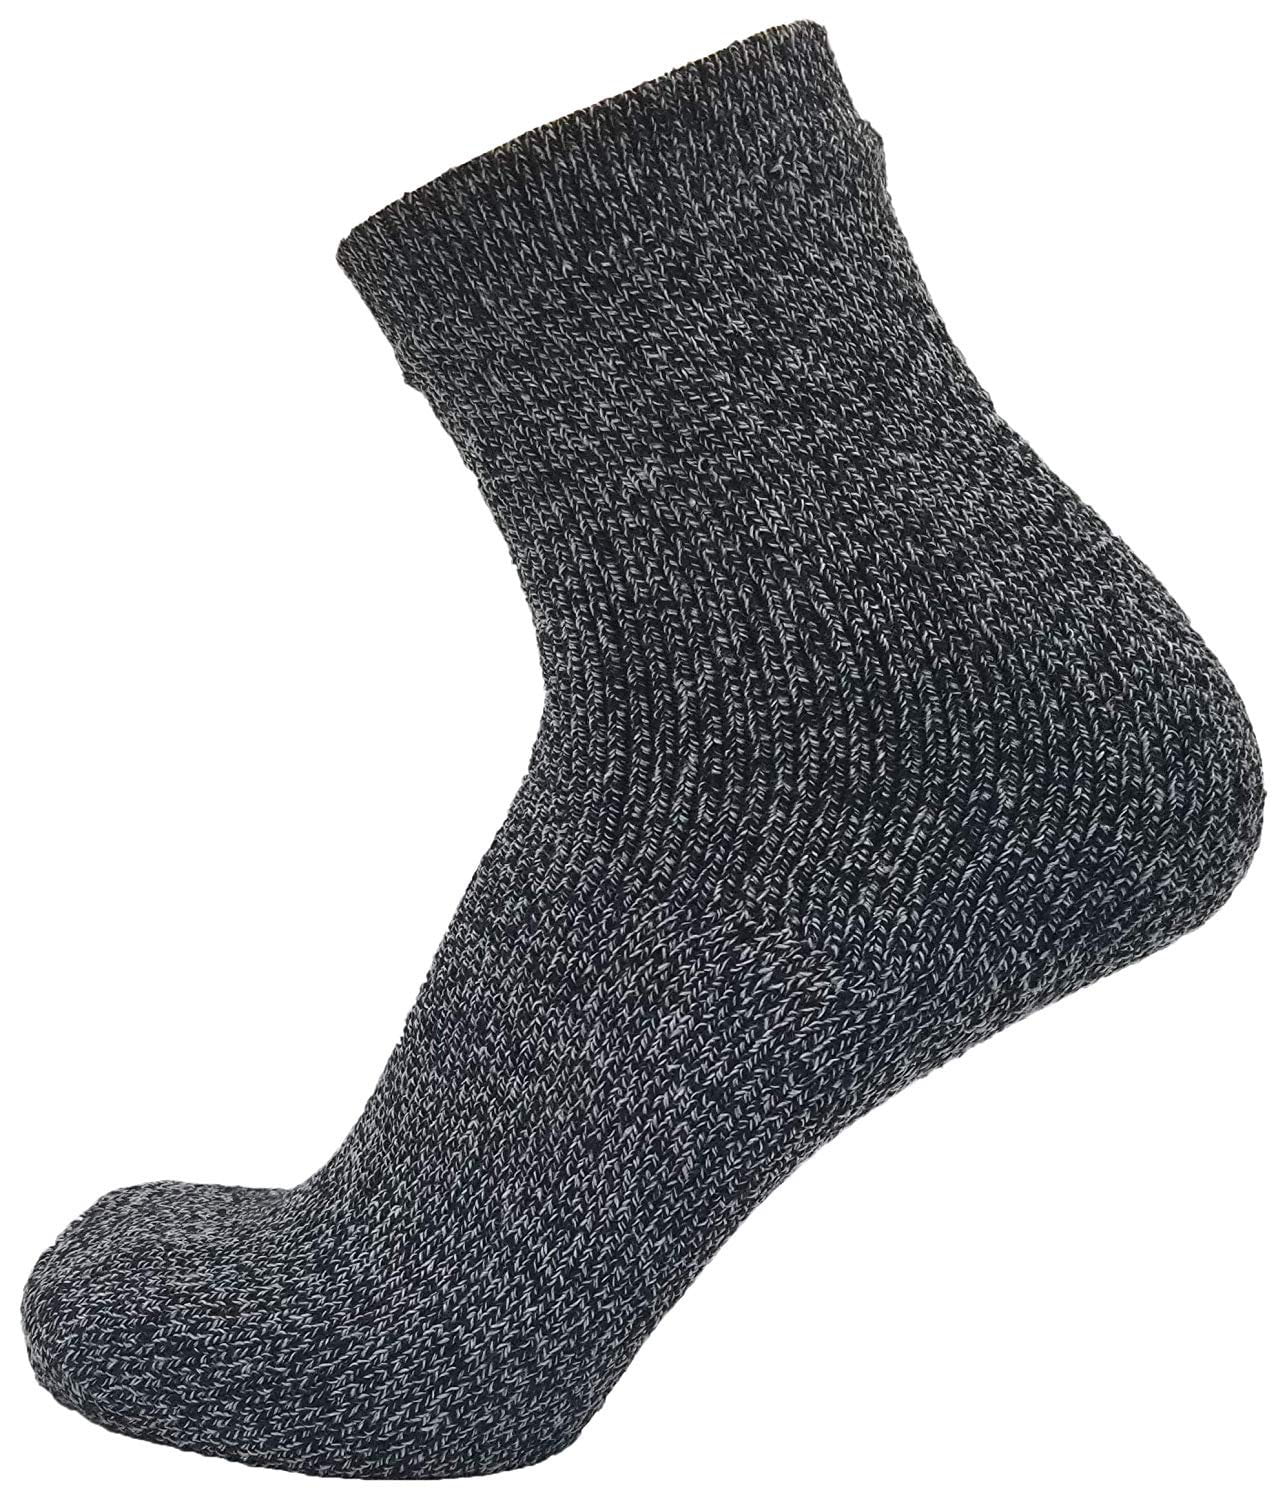 Mens Merino Wool Socks, 6 Pairs, Twisted Yarn Heavy Duty Heat ...